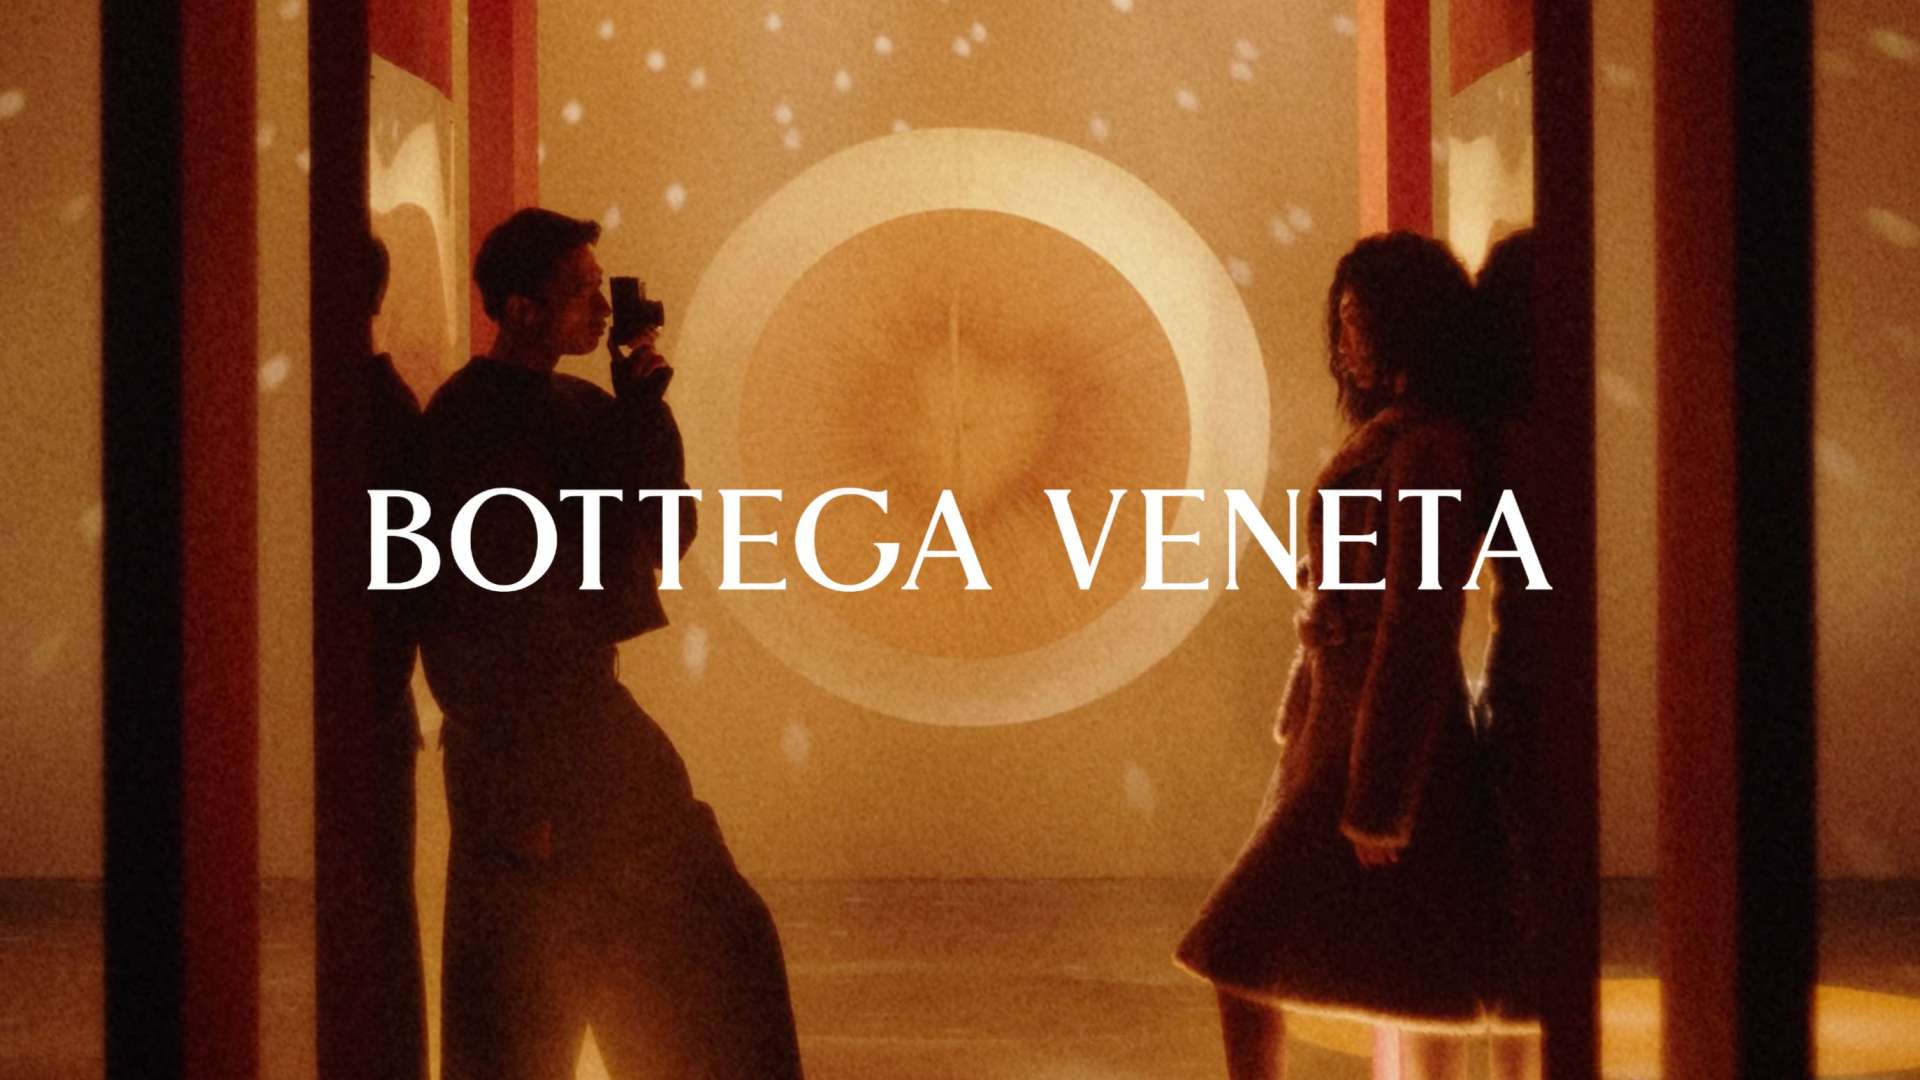 Bottega veneta 葆蝶家｜ Wardrobe 01新春系列